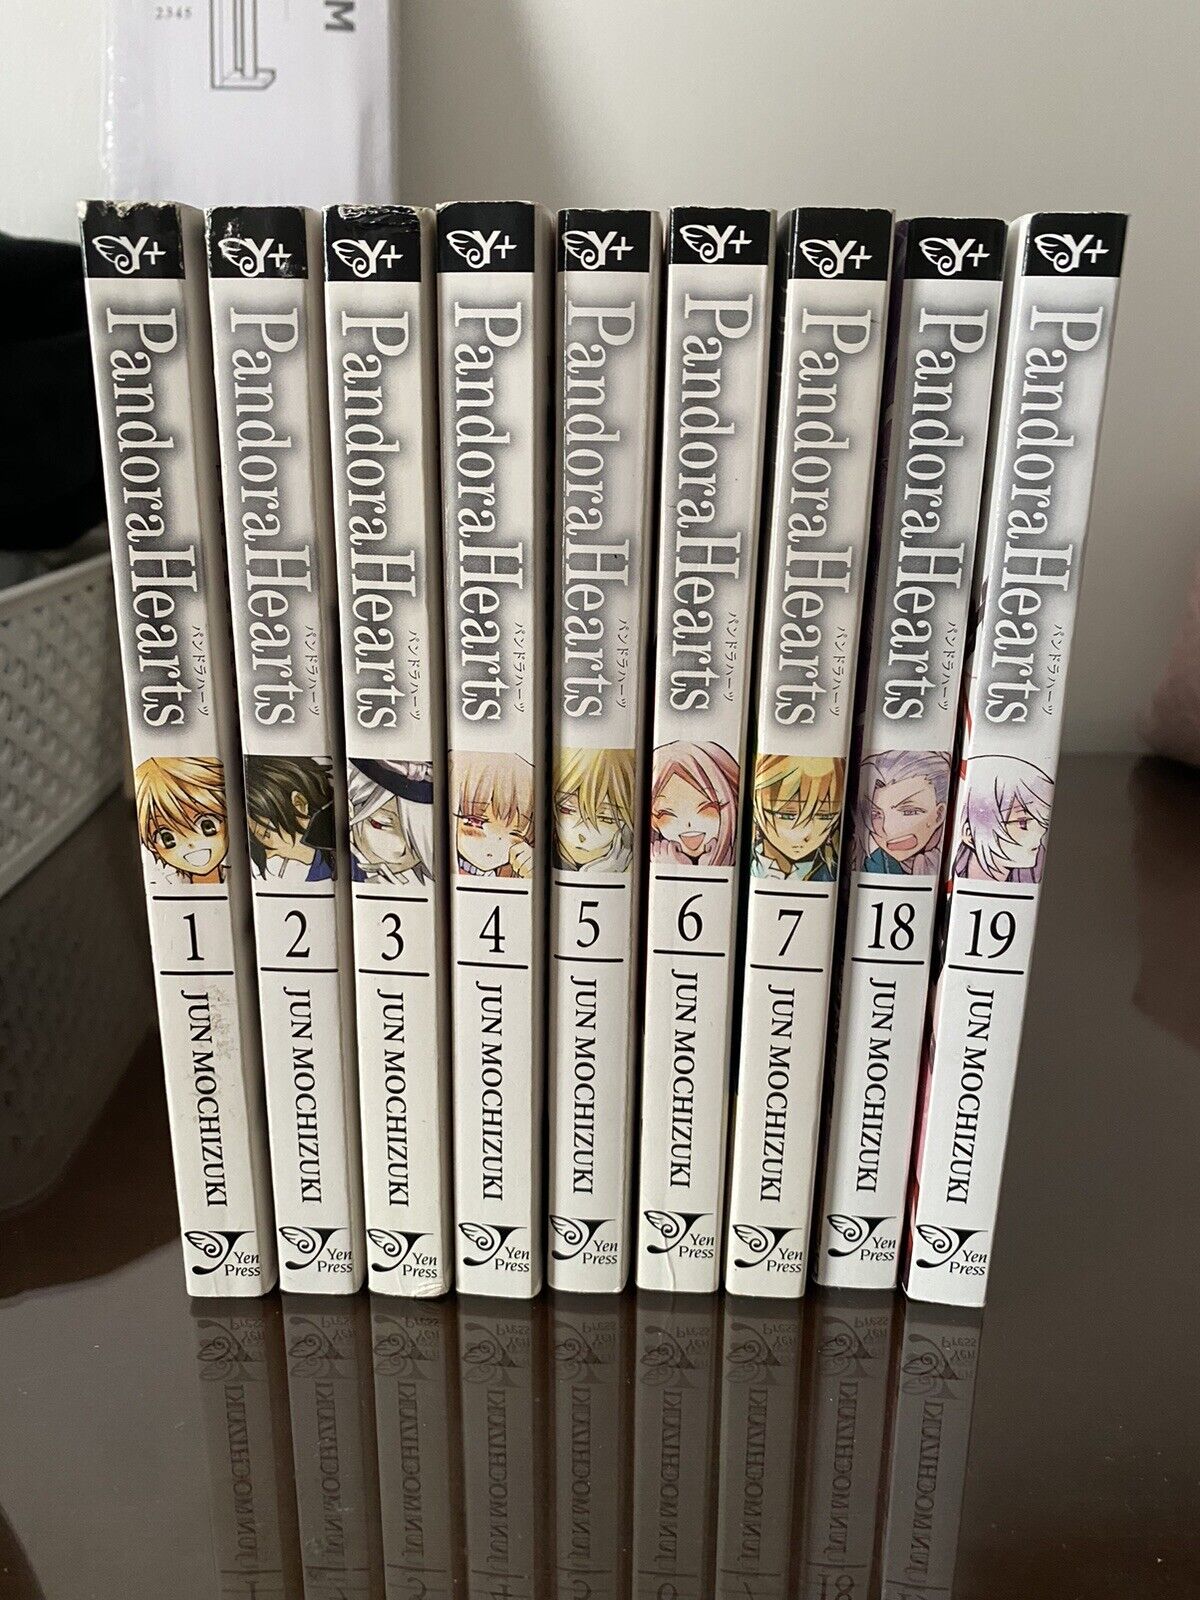 Pandora Hearts Manga Book English Volumes 1-7 and 18, 19 By Jun Mochizuki